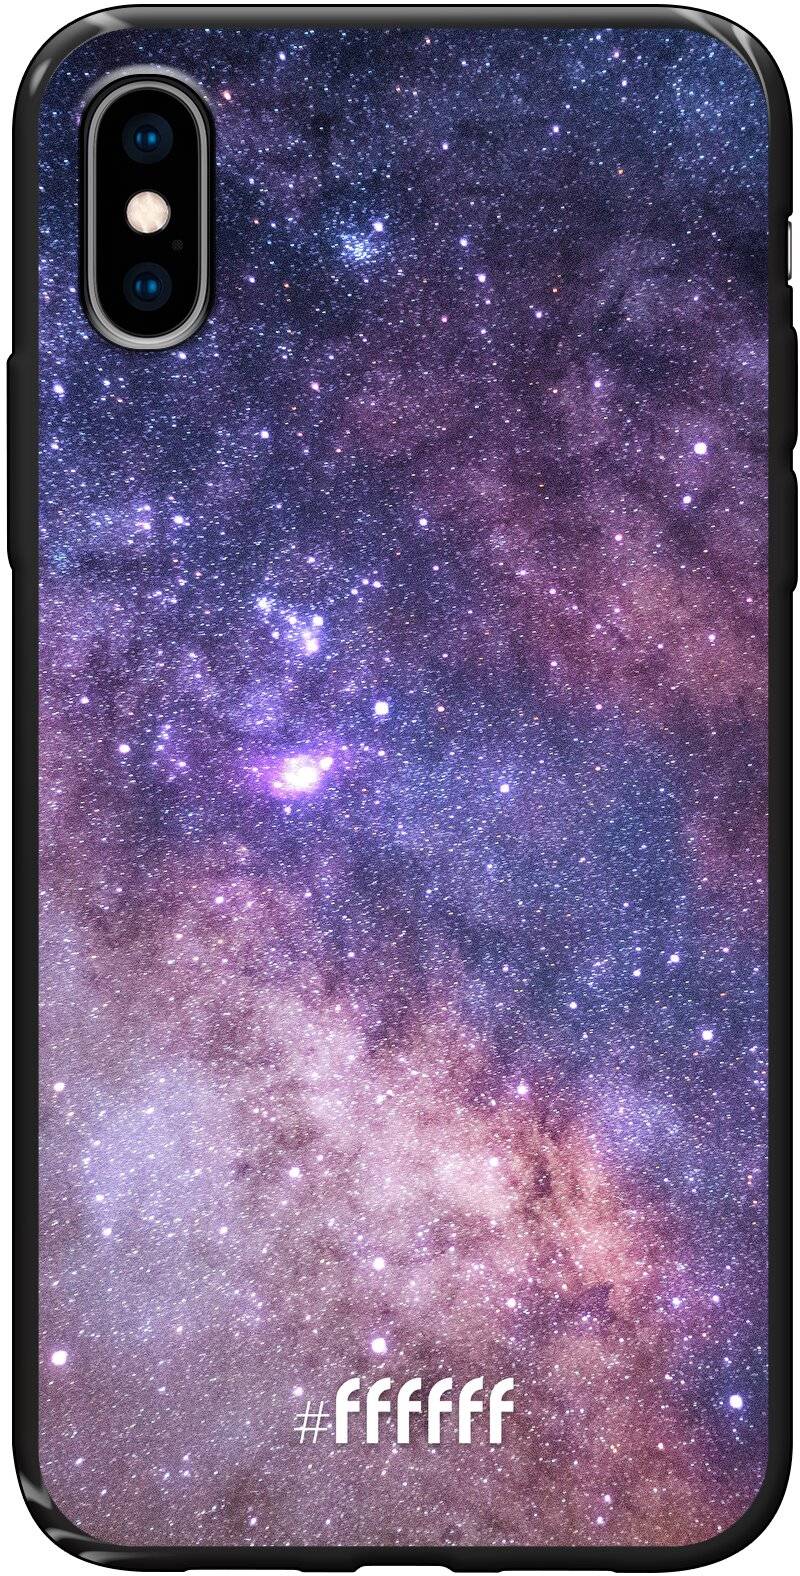 Galaxy Stars iPhone X